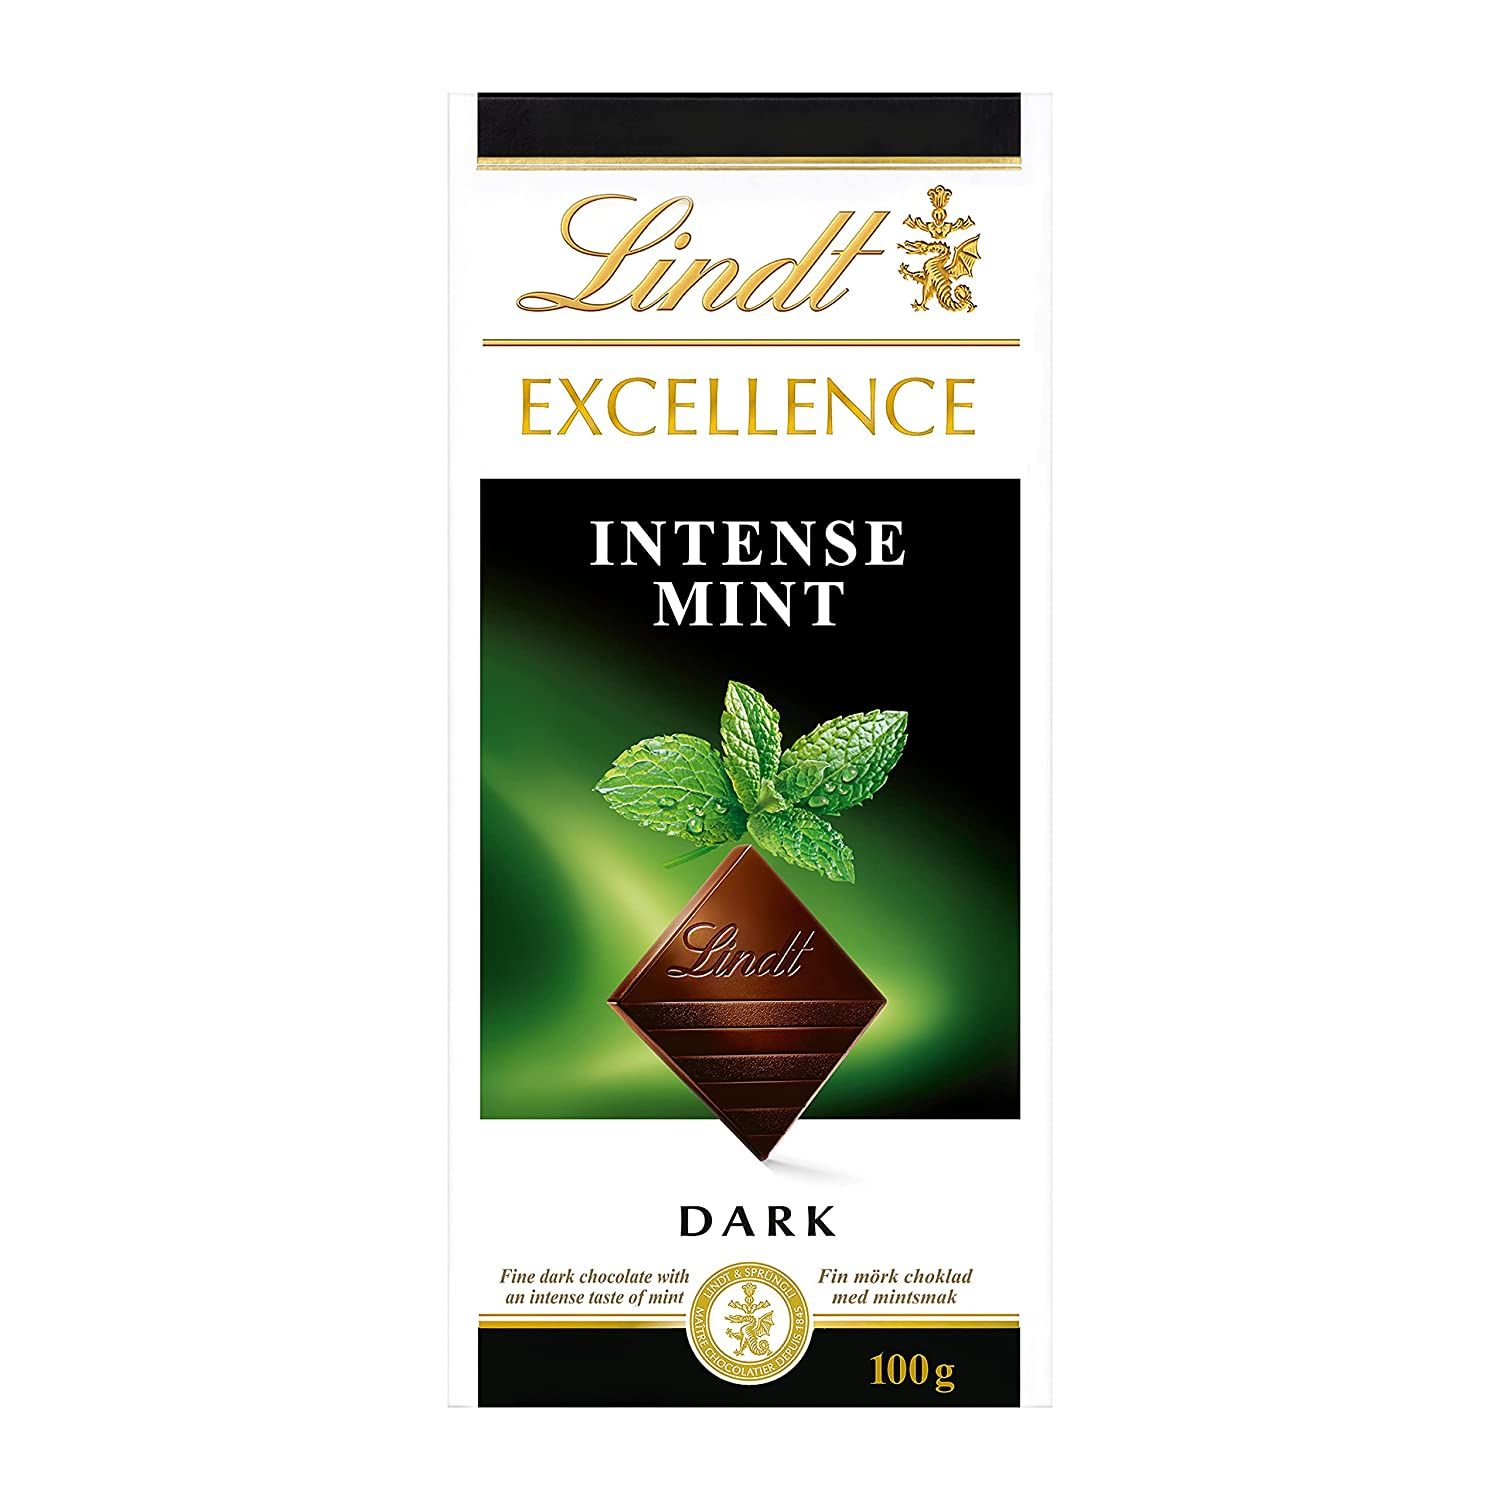 Lindt Intense Mint Chocolate Image